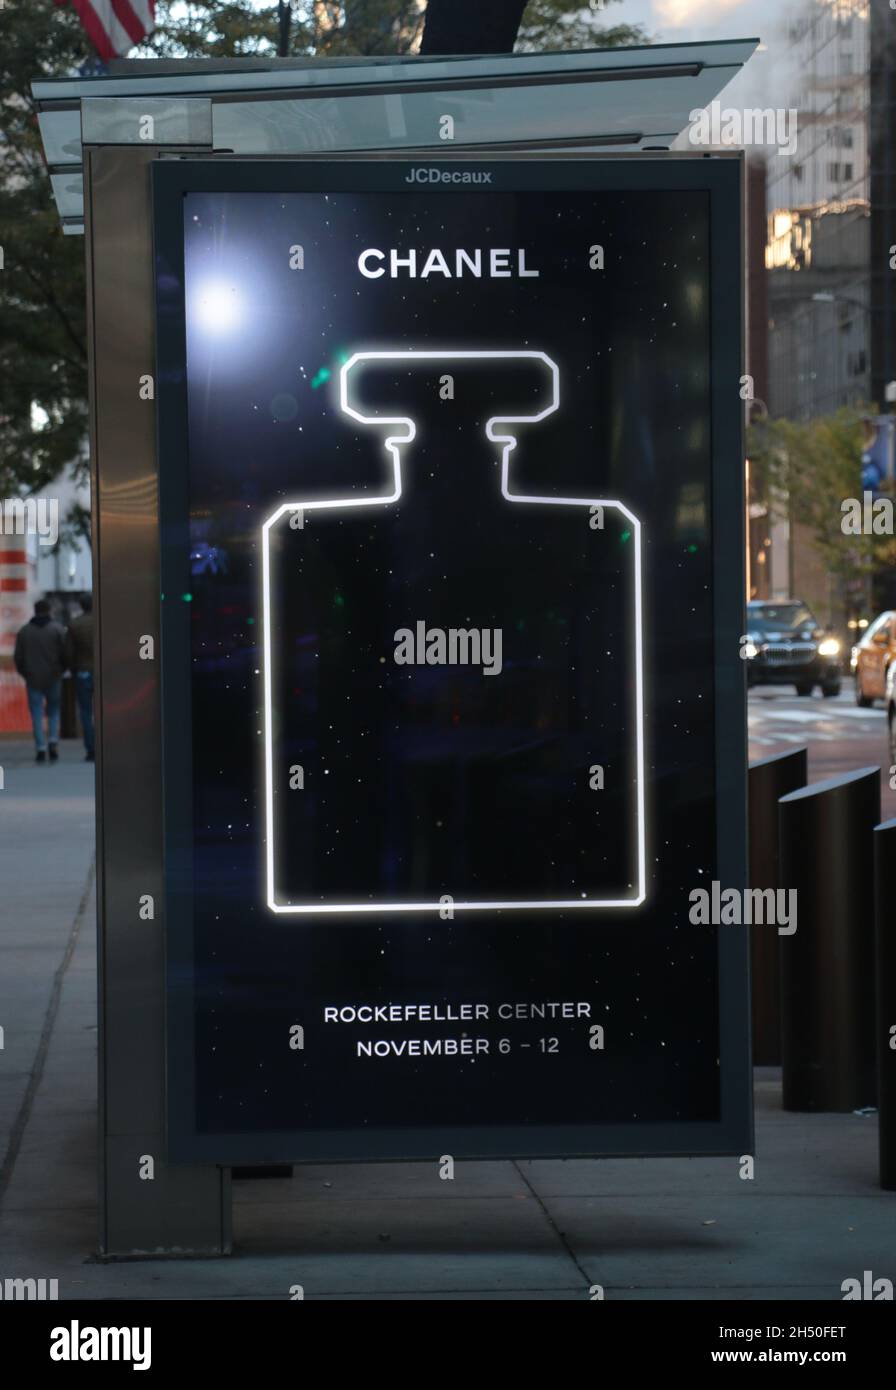 Chanel Original Advertising Perfume Store Display in Plexiglass at